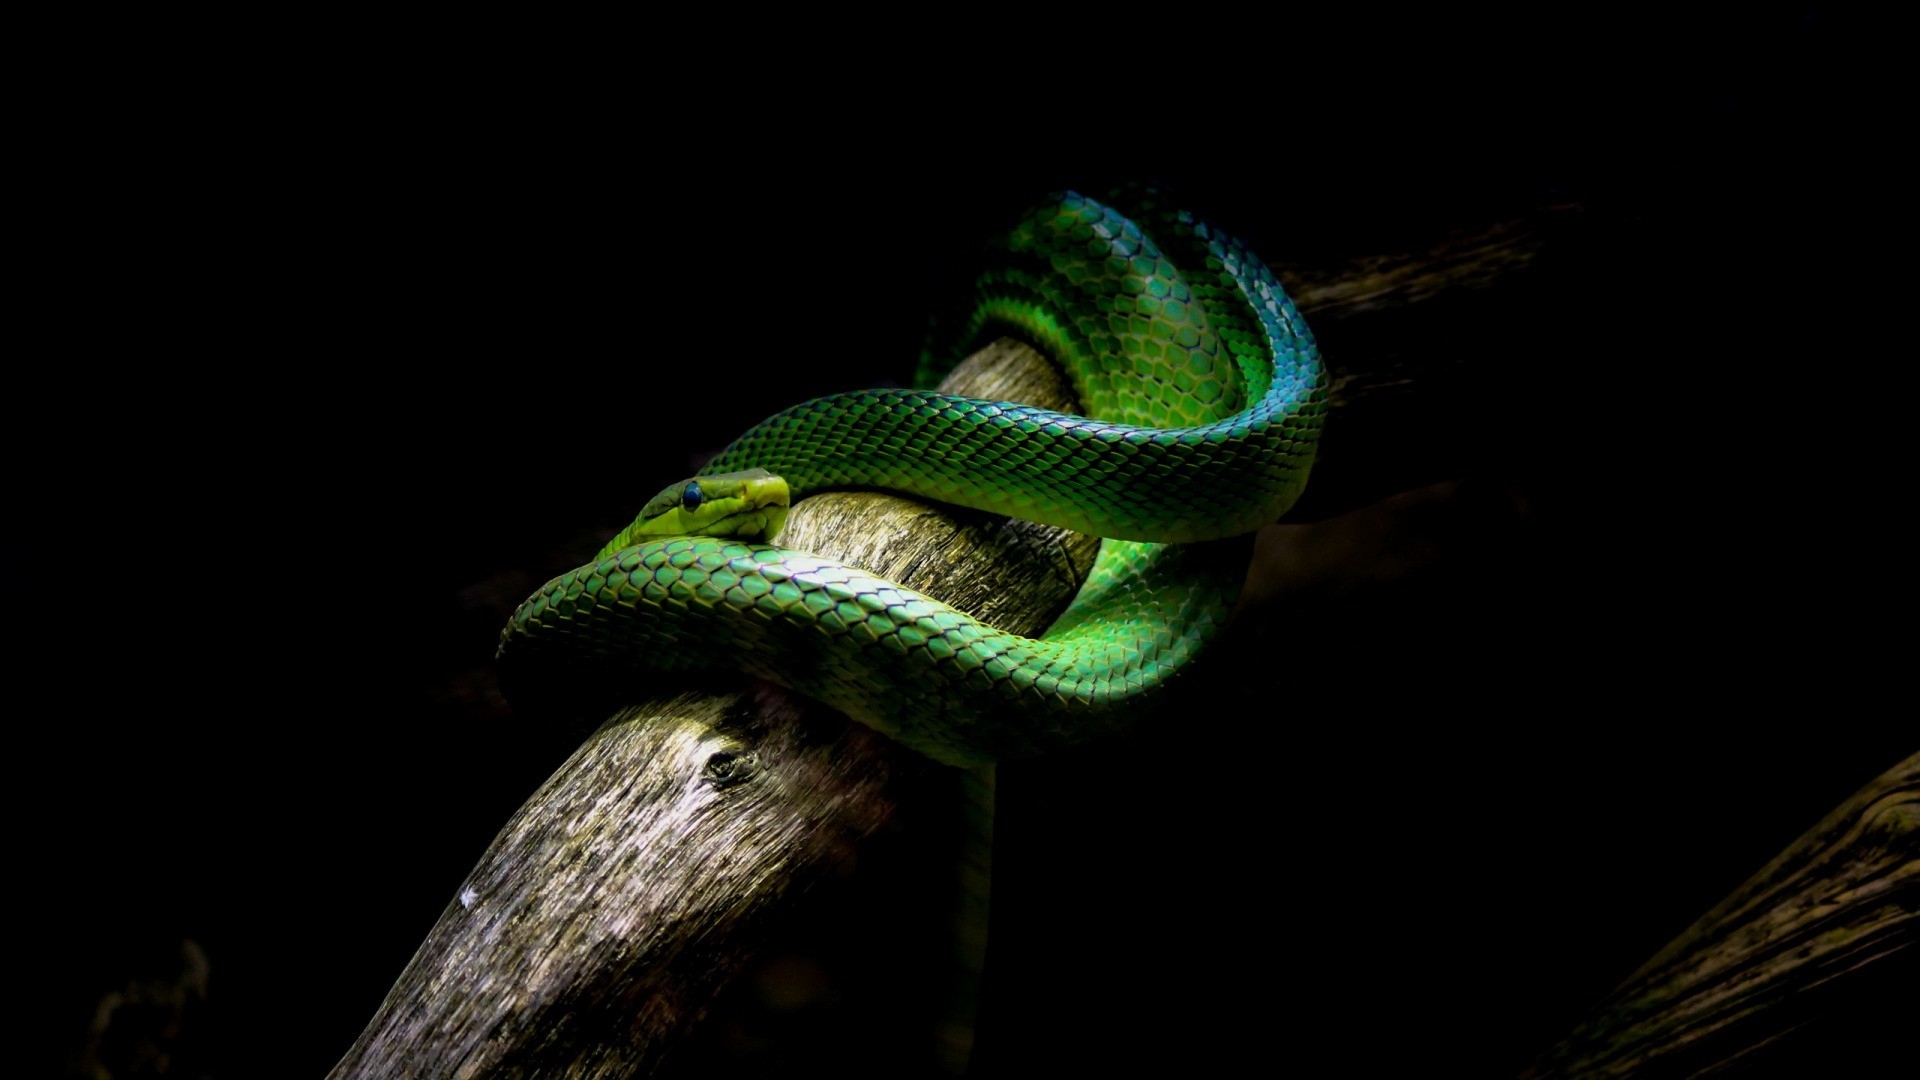 Wallpapers wallpaper green snake viper black background on the desktop